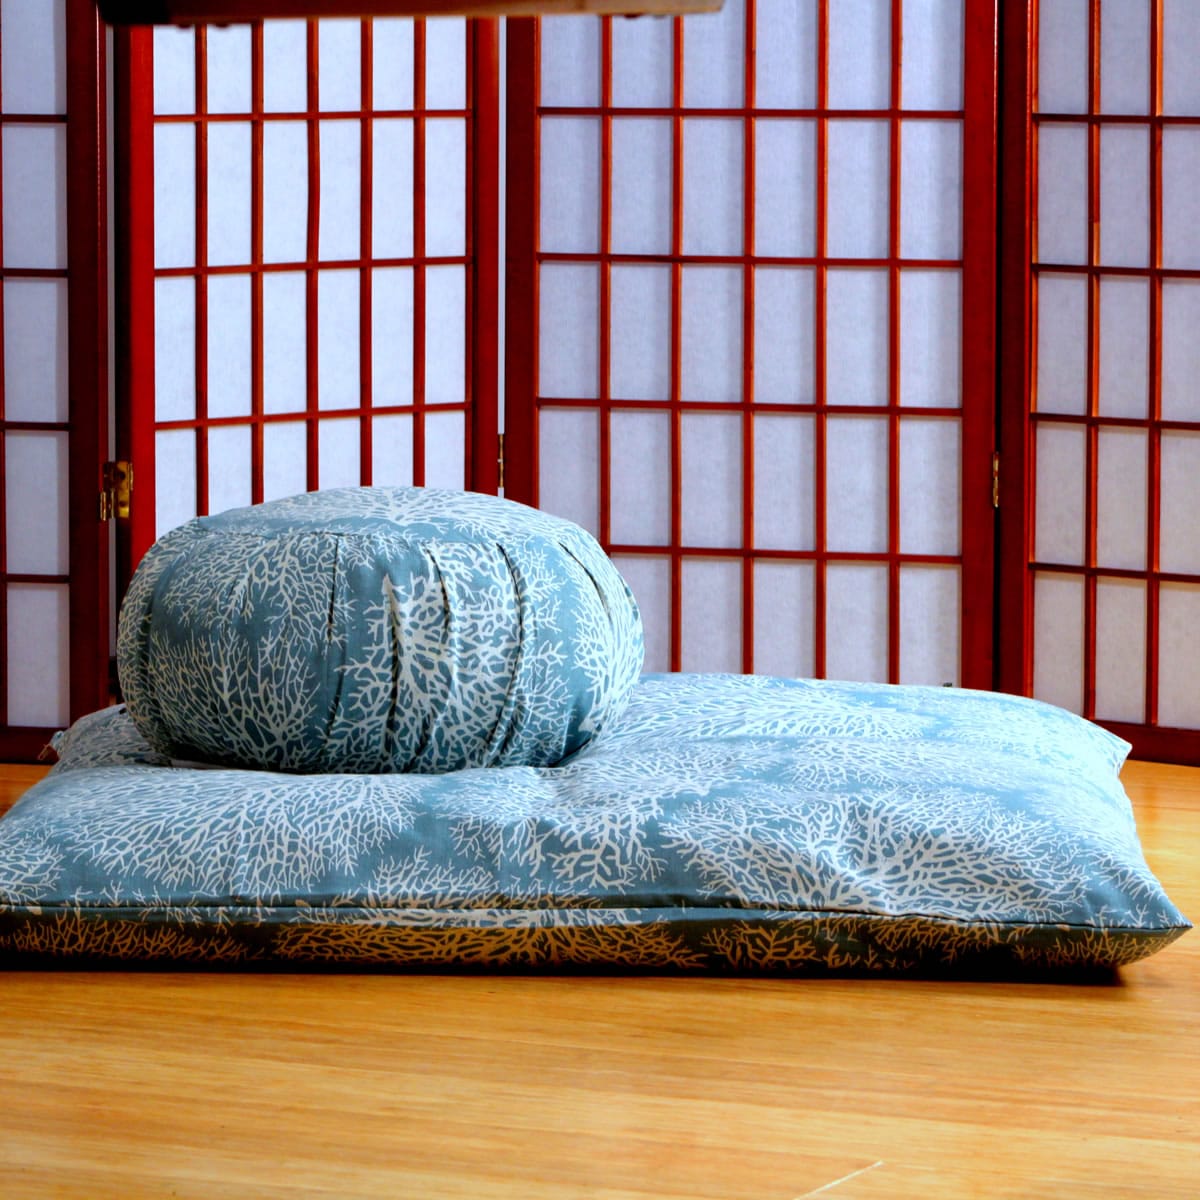 https://www.stillsitting.com/wp-content/uploads/2019/10/3-meditation-cushion-set-gallery.jpg